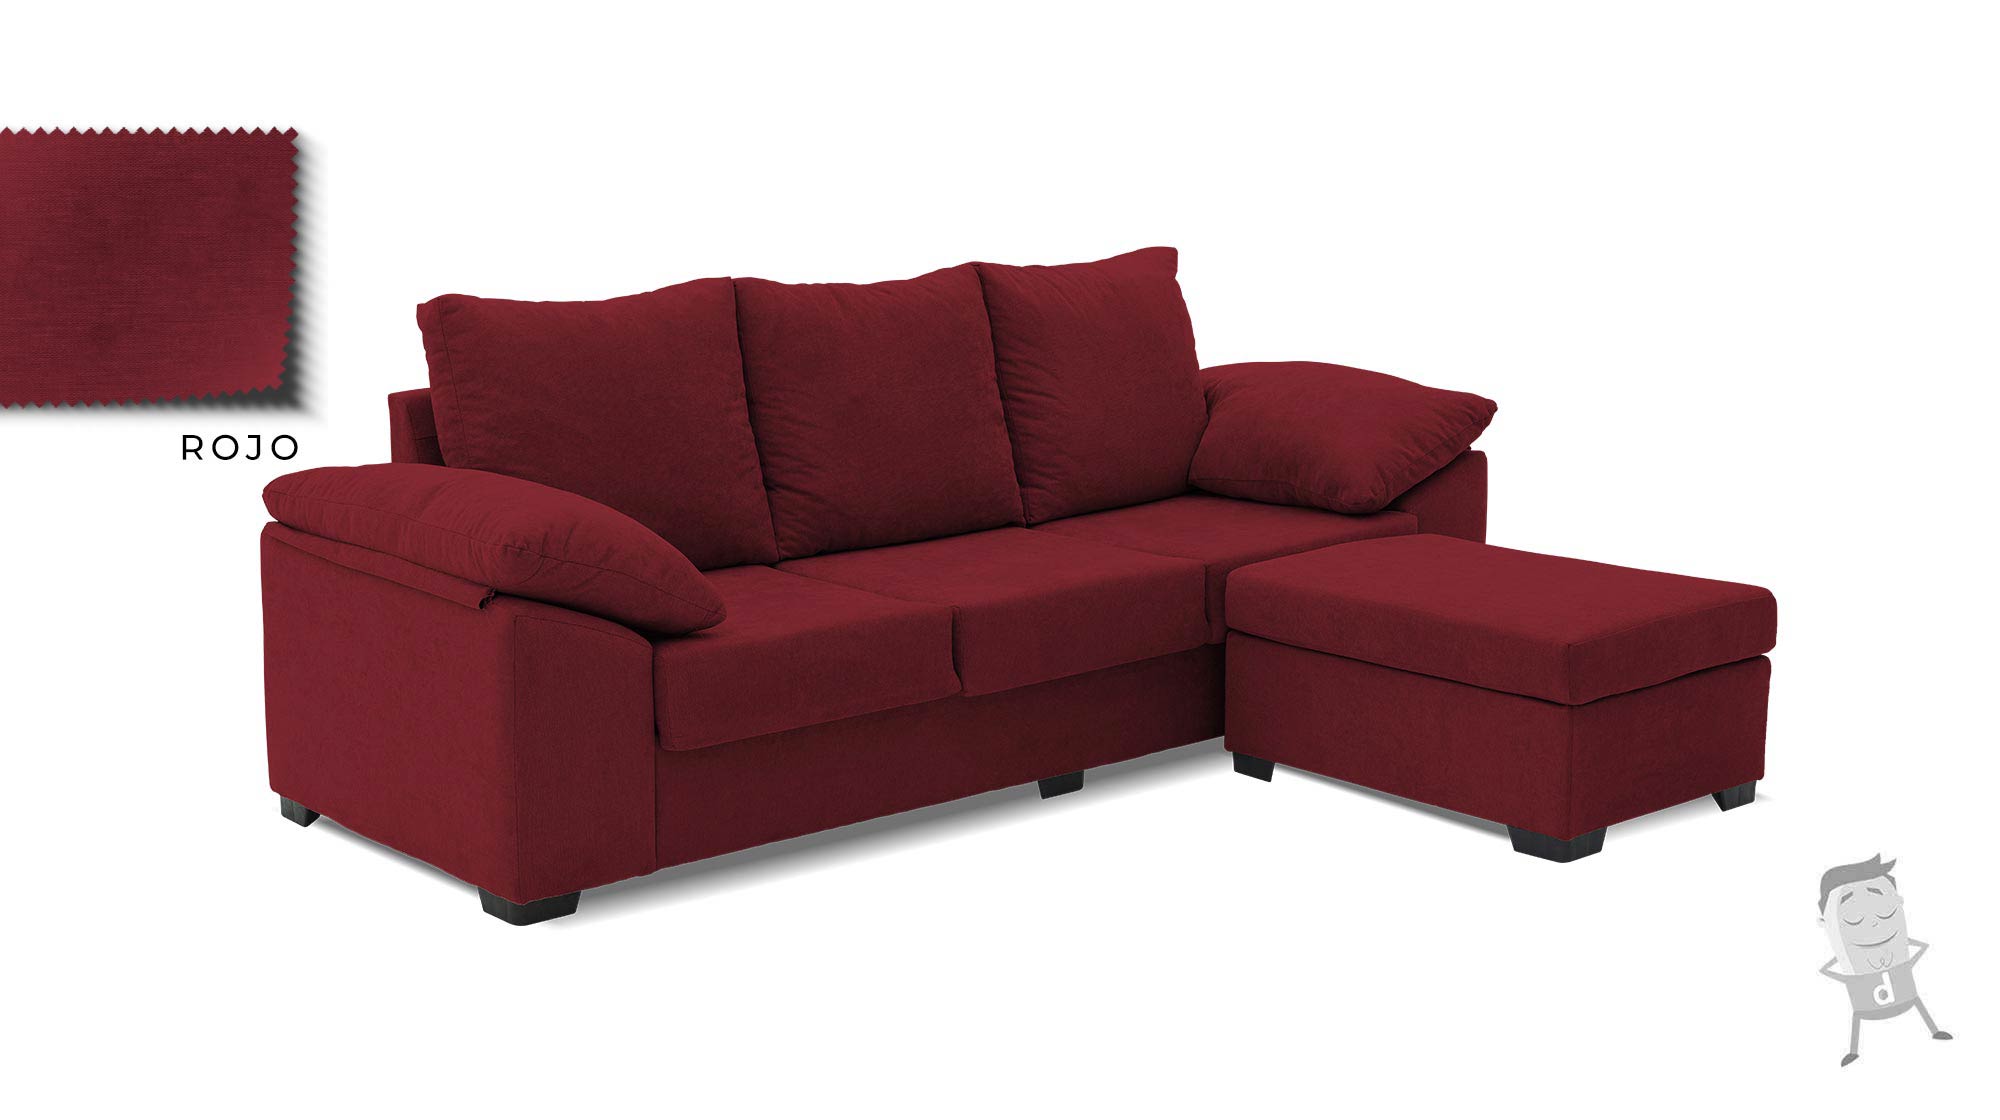 sofa-chaise-longue-ceo-rojo-lateral